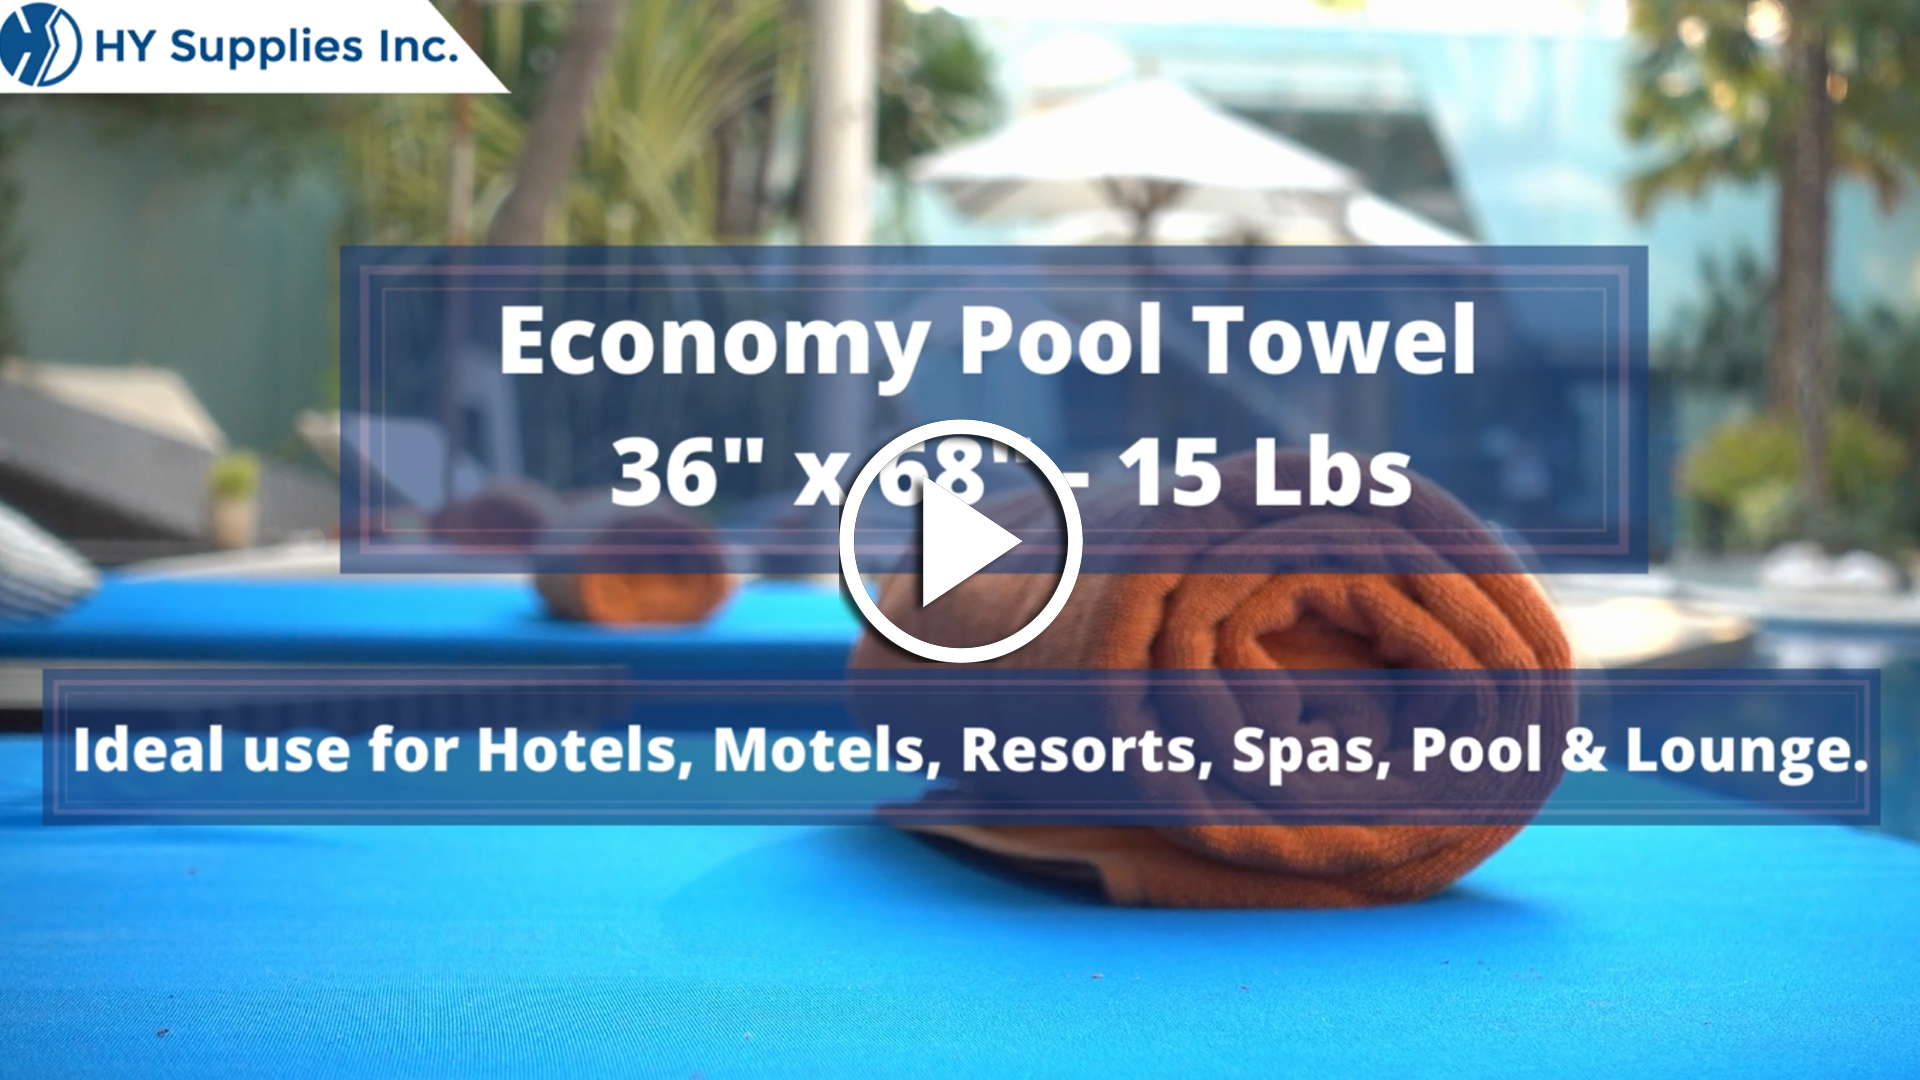 Economy Pool Towel - 36" x 68" - 15 Lbs.